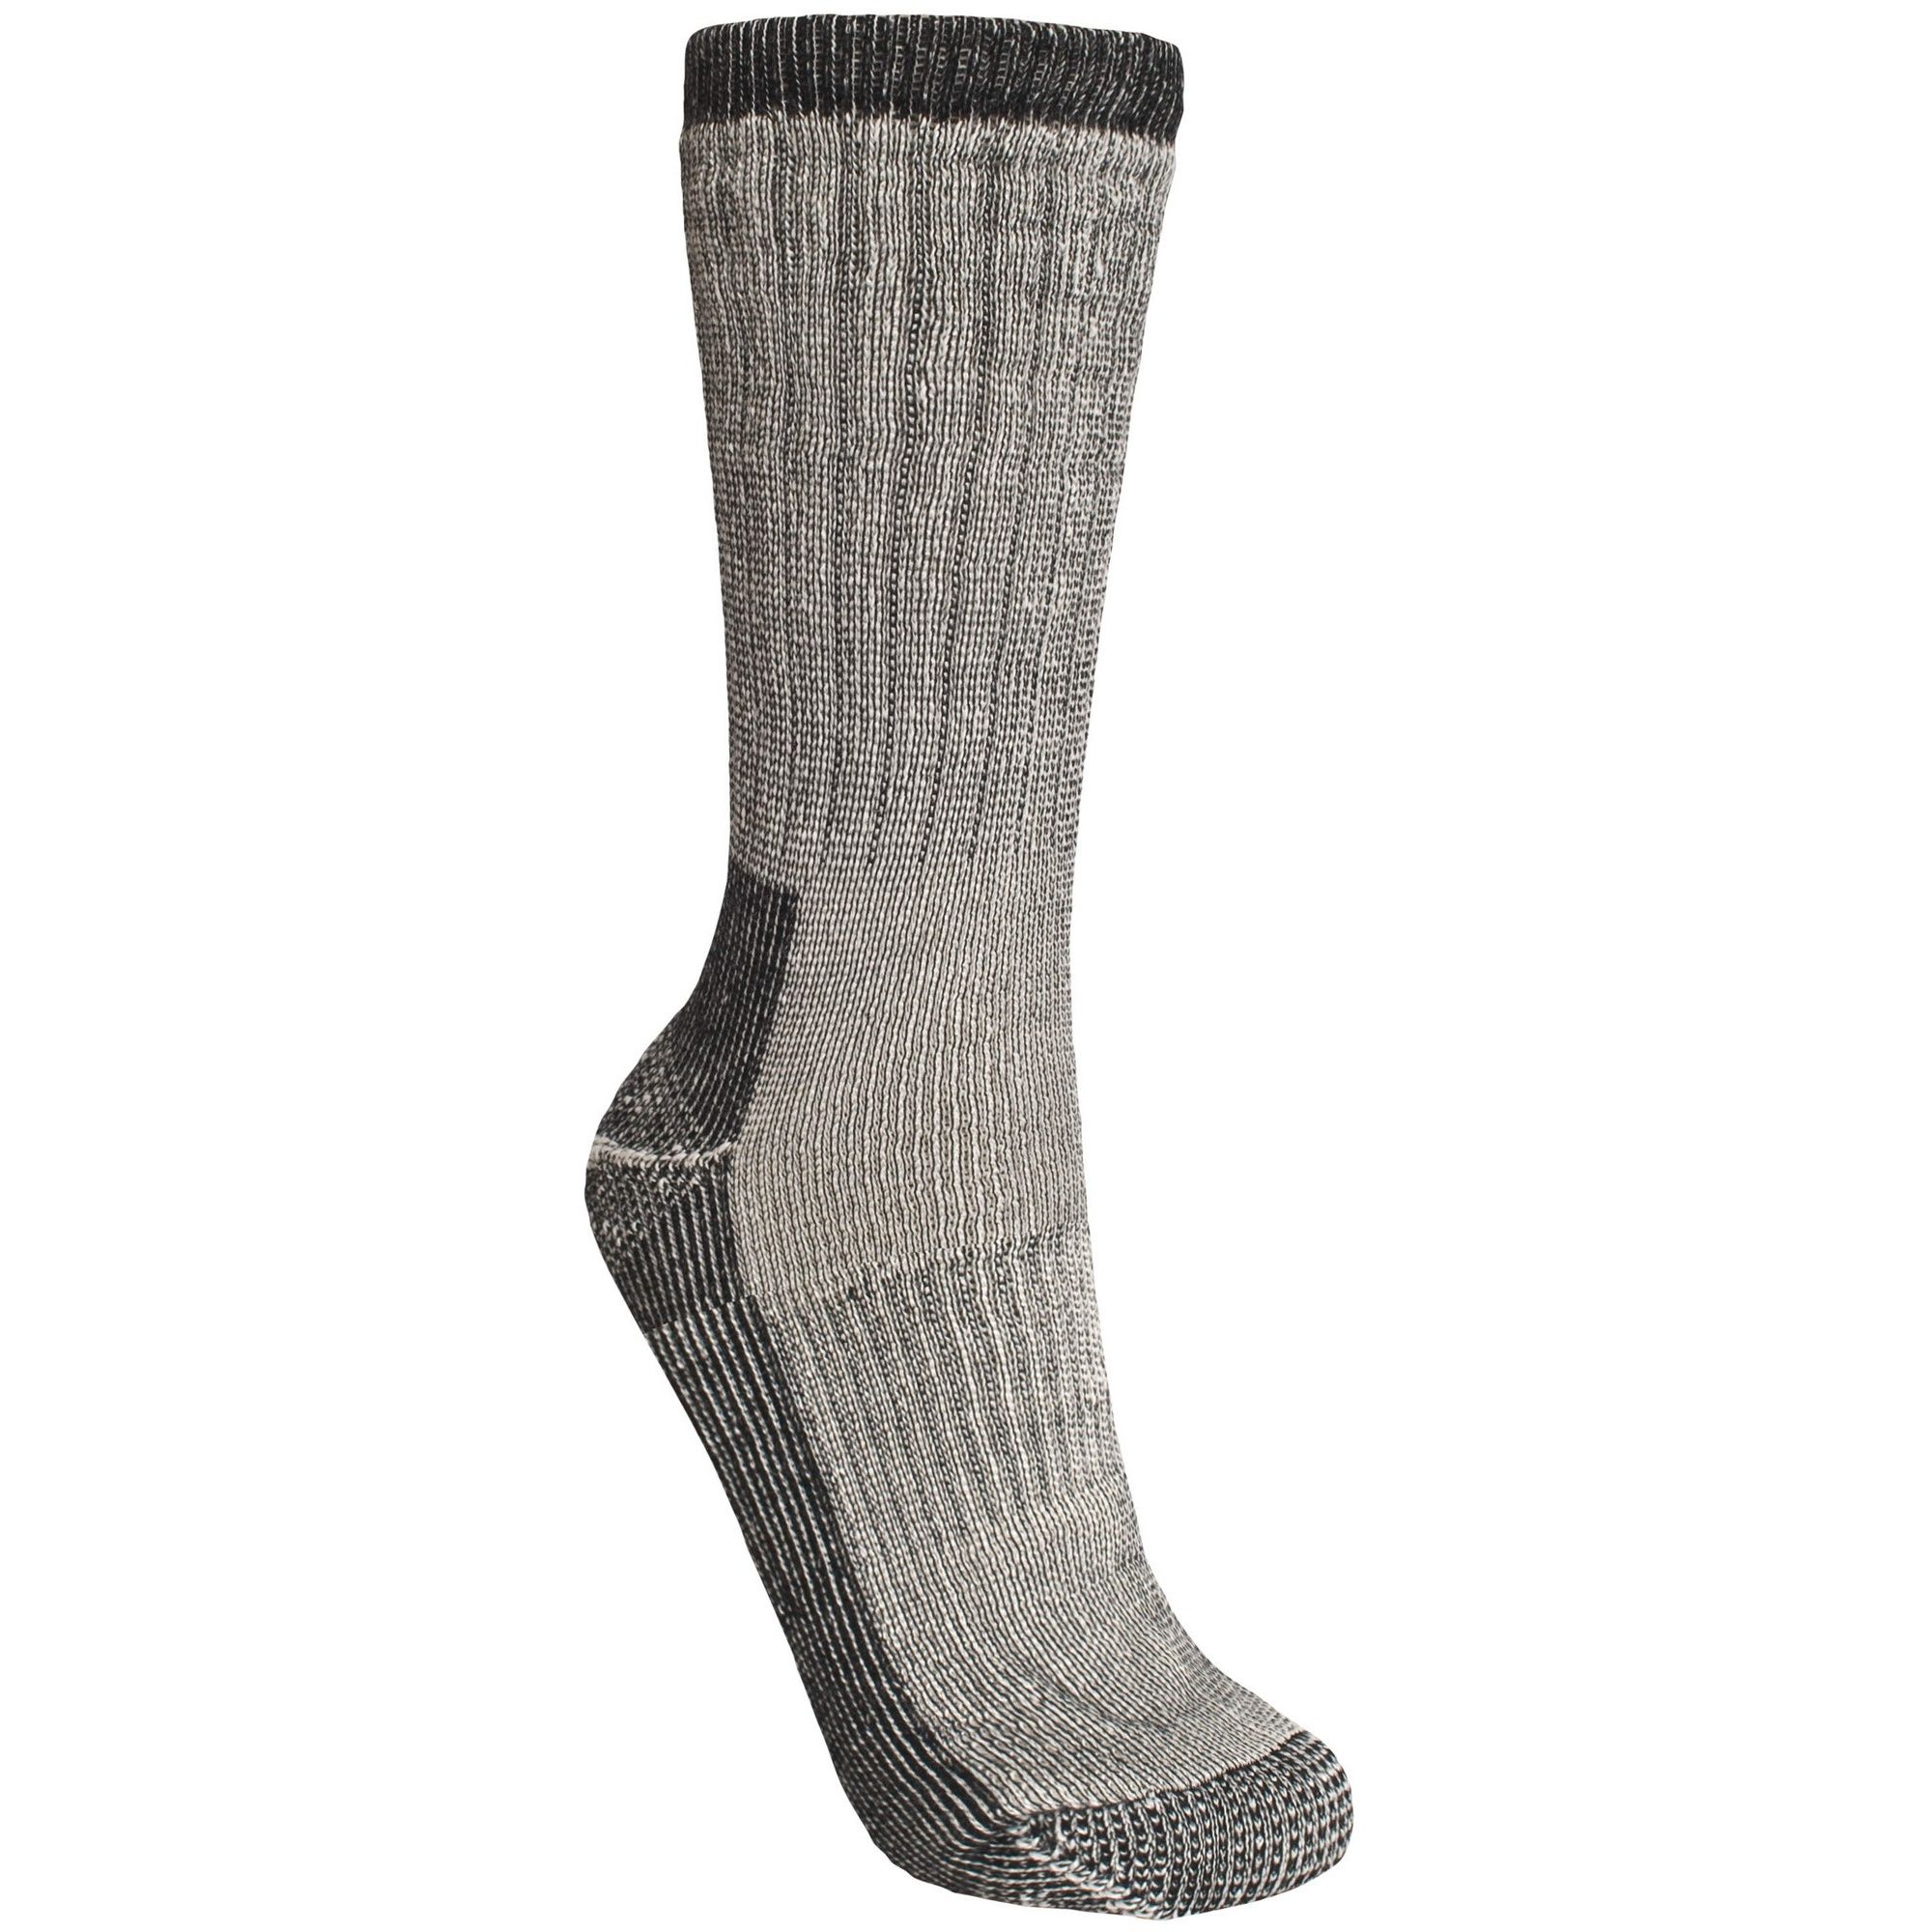 Mens hiking boot socks. Elasticated rib top. Warm cushion knit. Ribbed construction. Choice of 2 sizes: UK 4-7 or UK 7-11. 65% Merino Wool, 15% Nylon, 14% Acrylic, 5% Polyester, 1% Rubber.